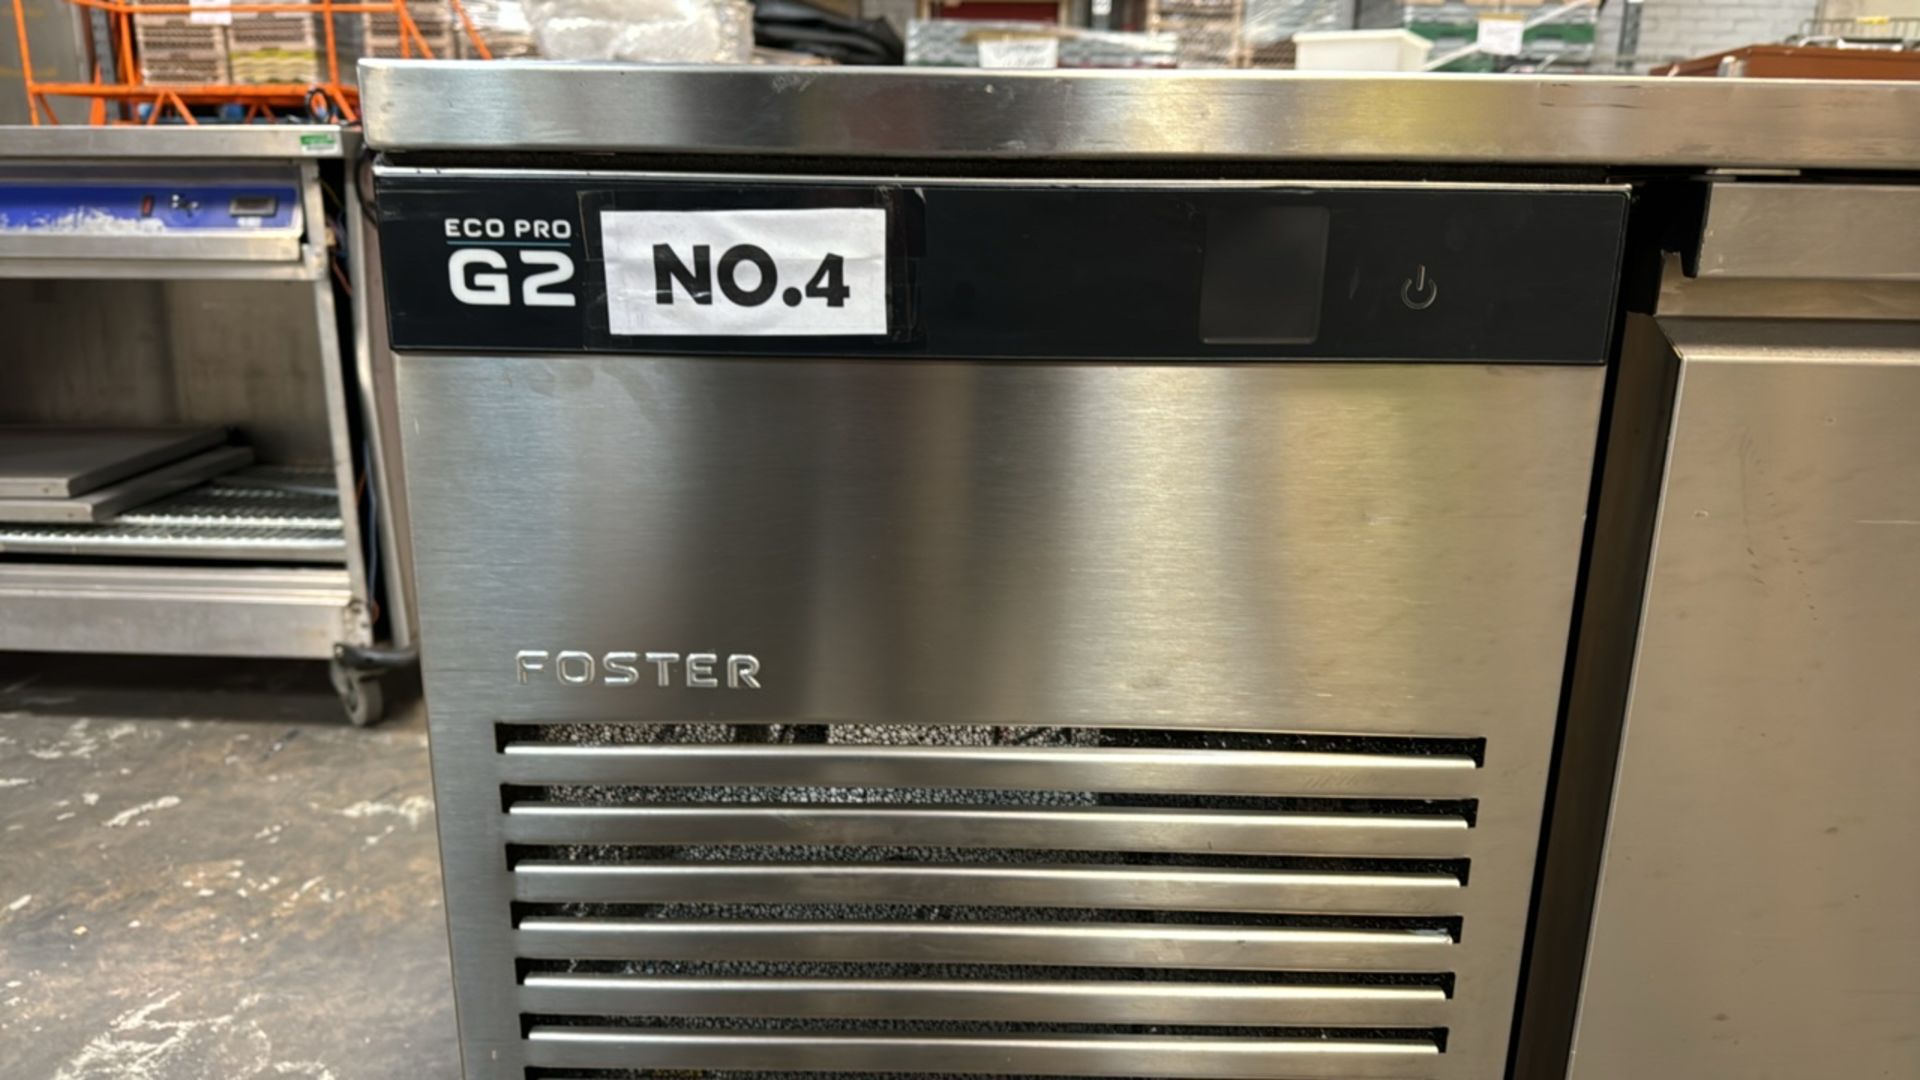 Foster Eco Pro G2 Undercounter Fridge Unit - Image 3 of 8